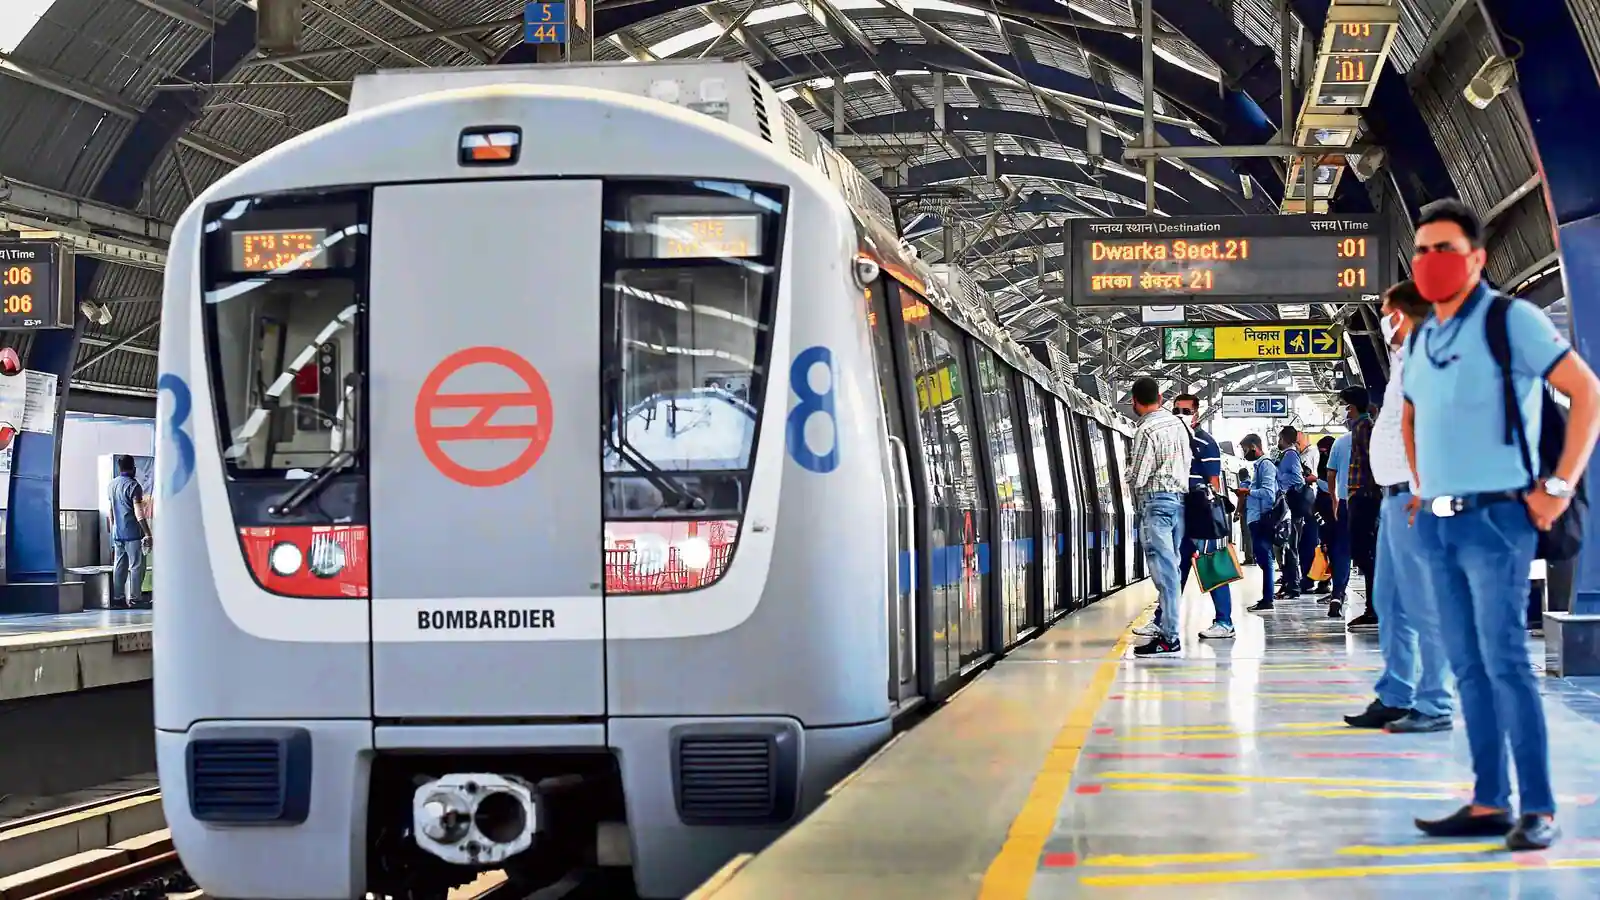 Delhi Metro will curtail services on Republic Day